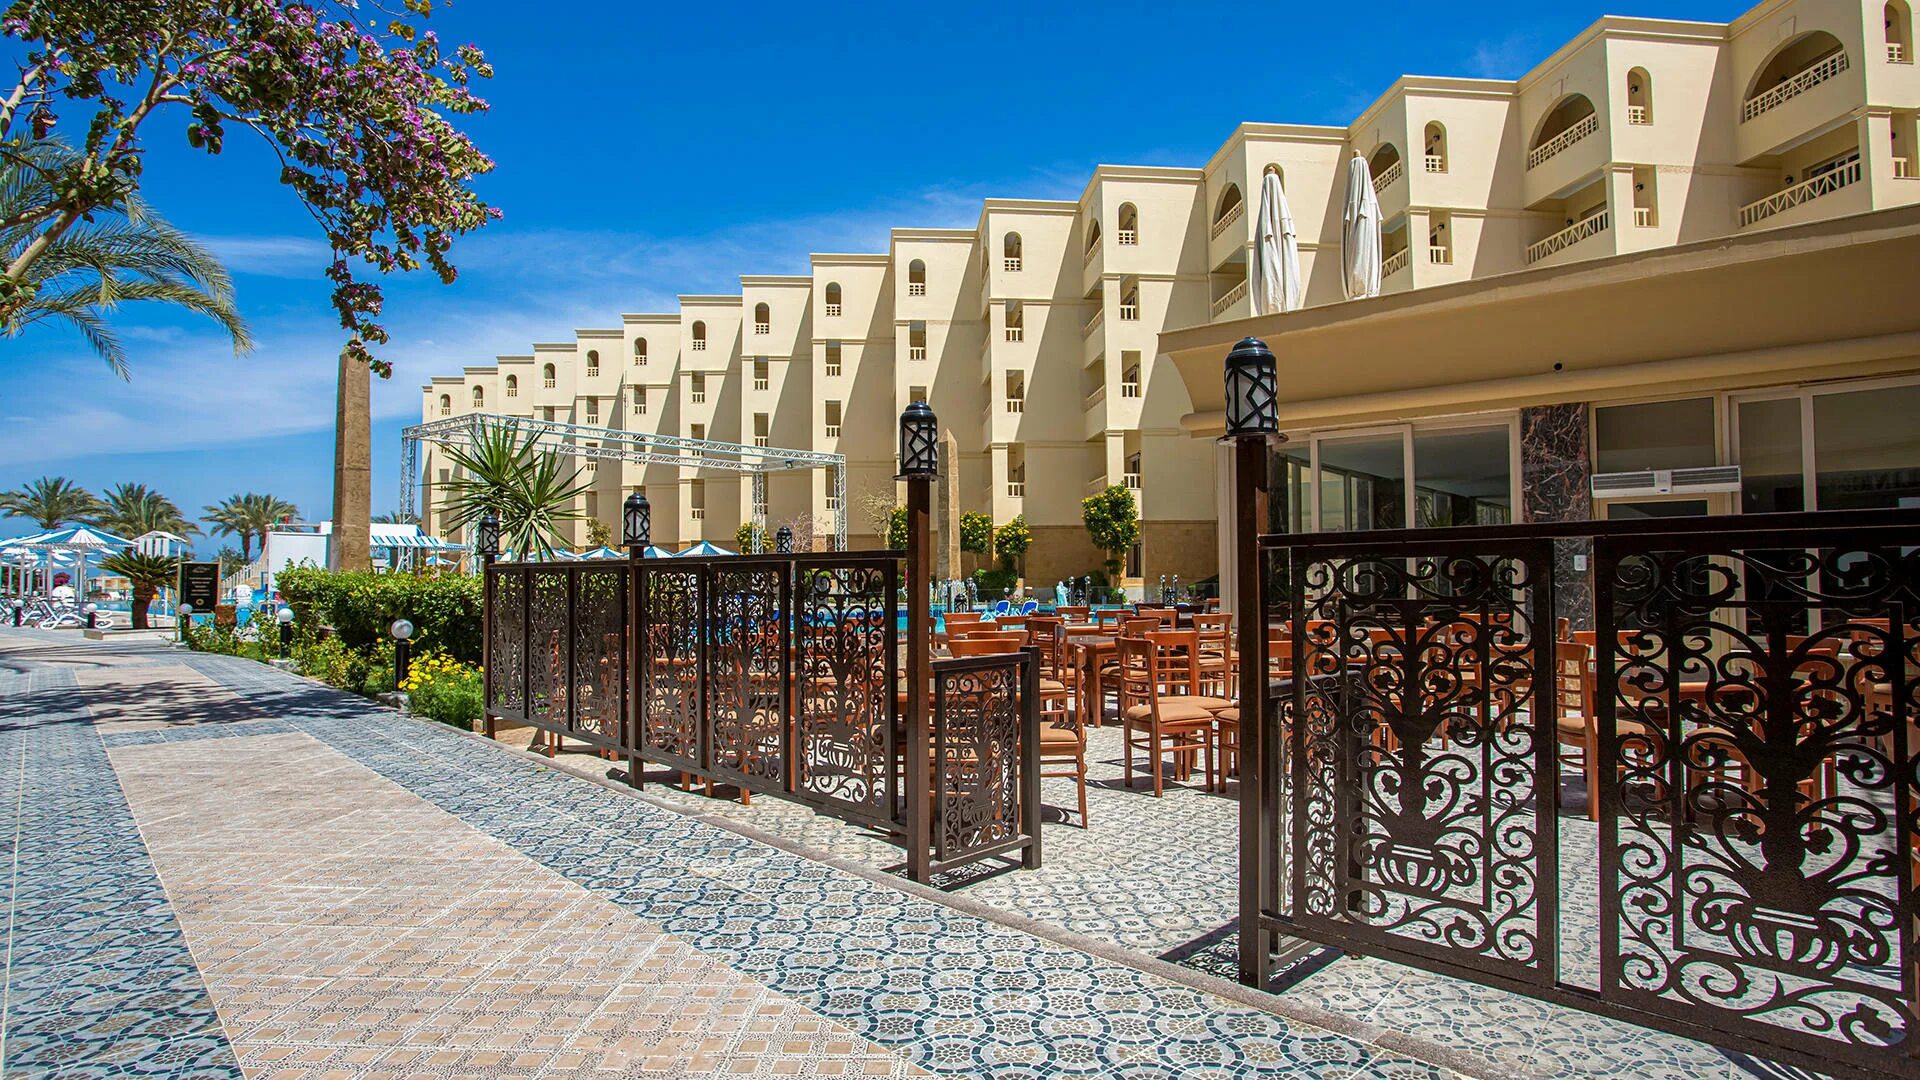 Amc royal hotel spa египет хургада. AMC Royal Hotel в Хургаде. AMC Royal Hotel Spa 5. AMC Royal Hotel Spa 5 Египет Хургада. Египет отель АМС Роял Хургада 5.